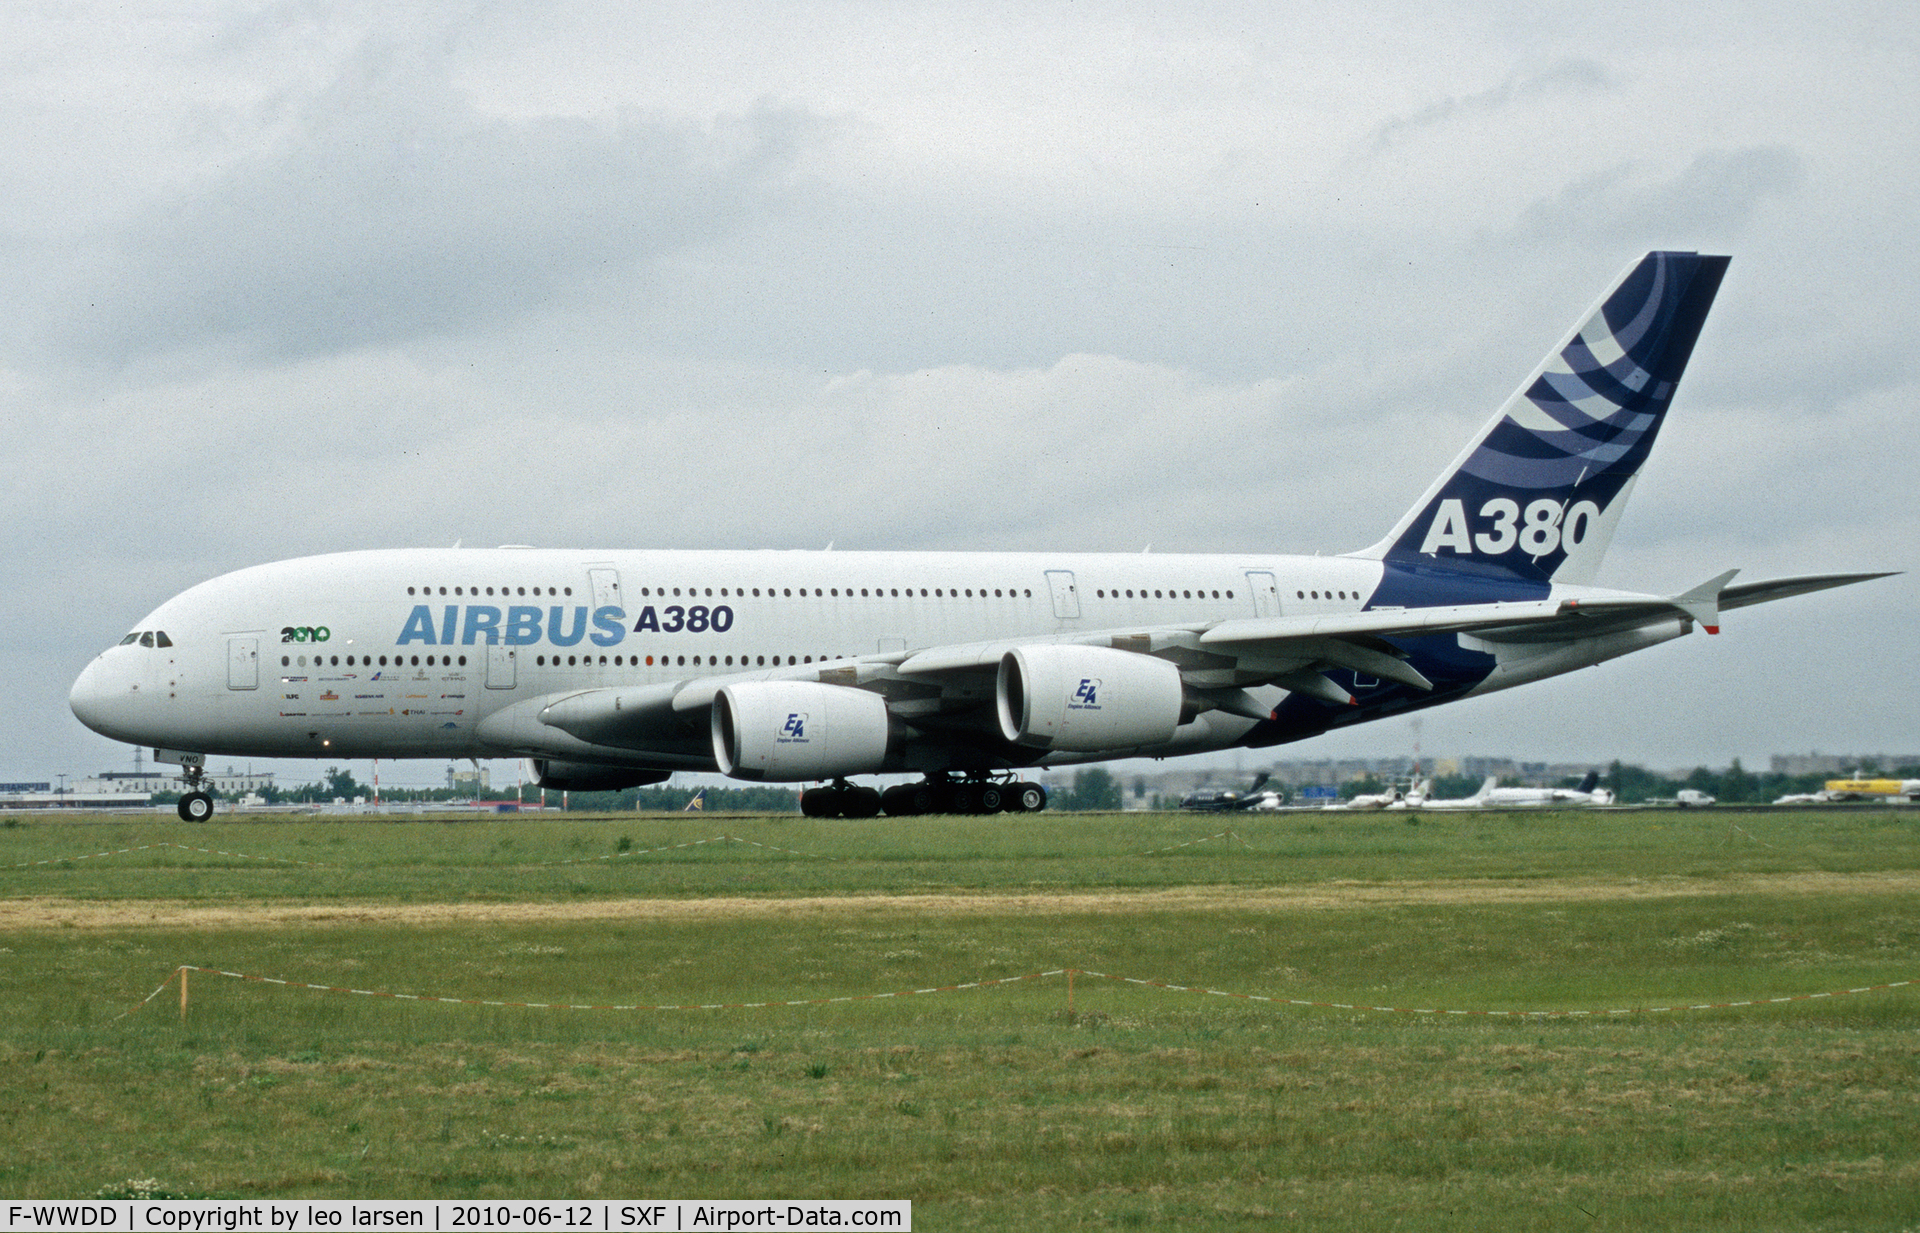 F-WWDD, 2005 Airbus A380-861 C/N 004, Berlin Air Show 12.6.2010